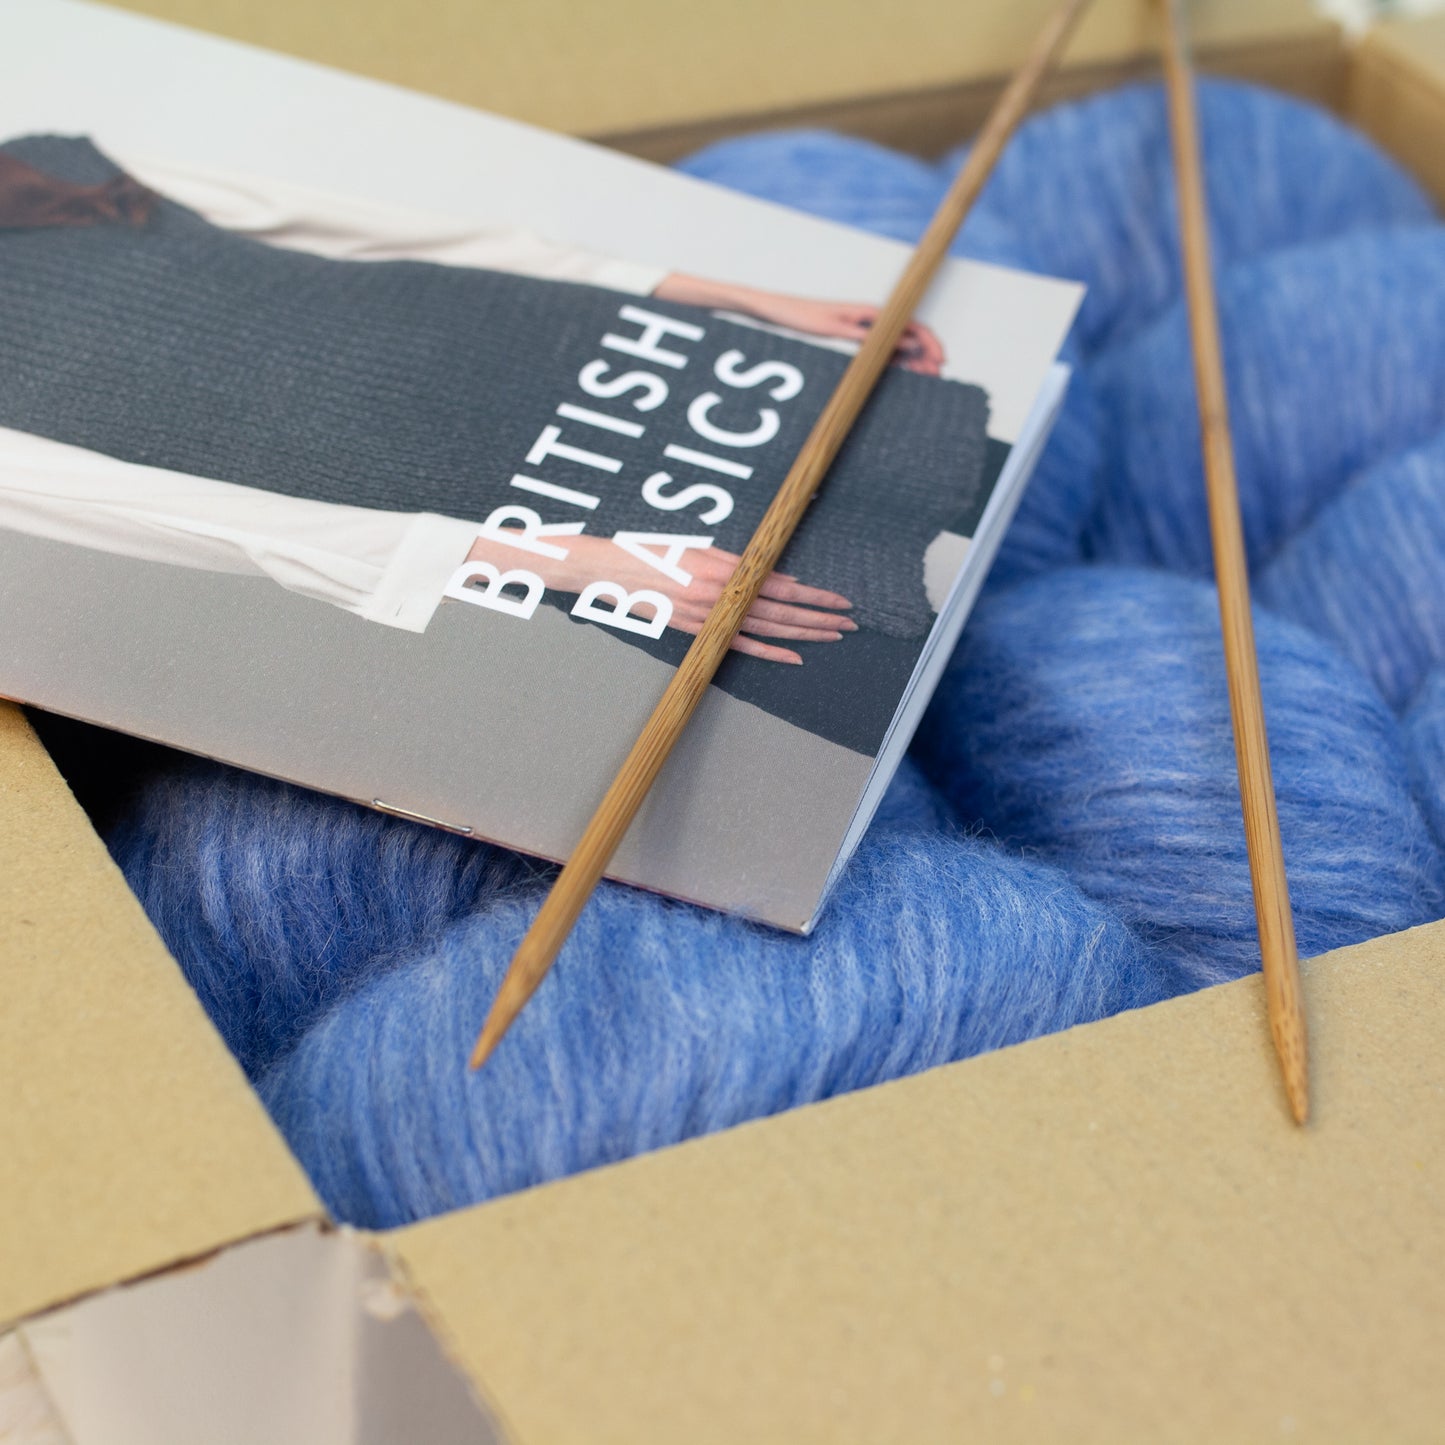 Makerly Knitting or Crochet Subscription Box